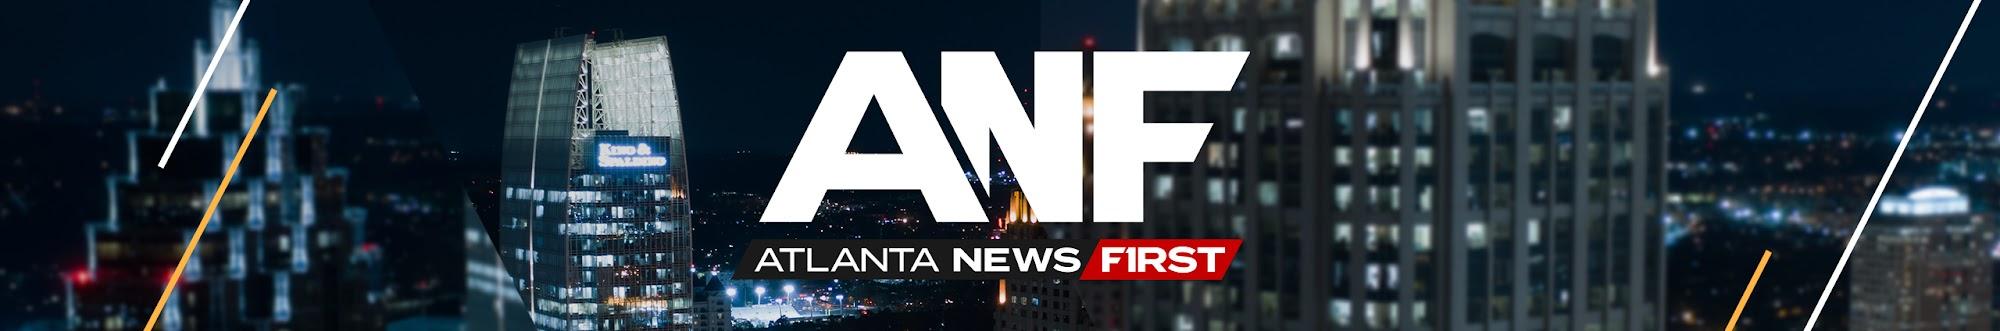 Atlanta News First 